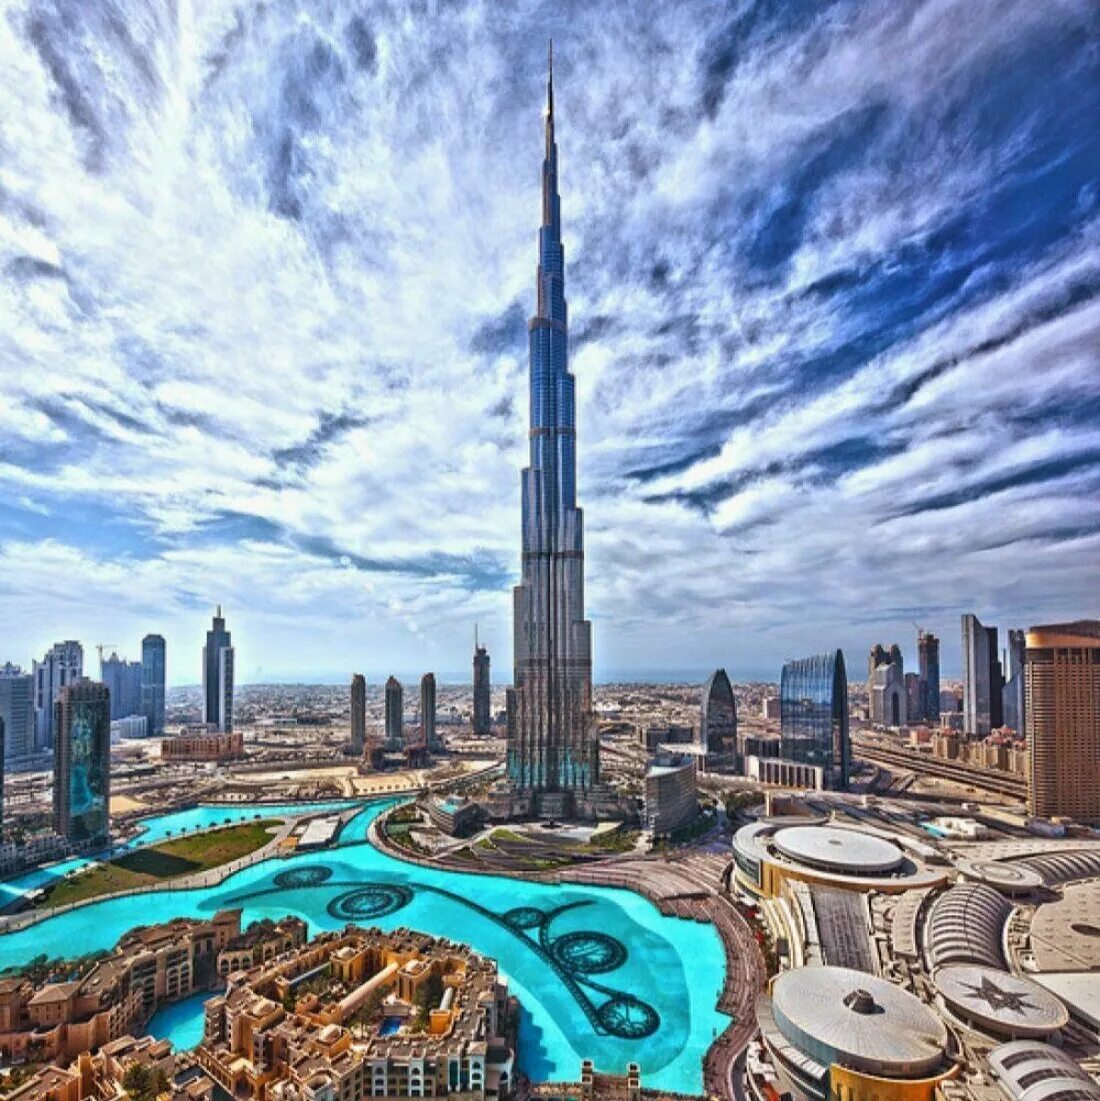 Бурдж-Халифа Дубай. Башня Халифа в Дубае. Башня БУШХАЛИФА В Дубае. Бурдж-Халифа Дубай 2022. Бурдж халифа объединенные арабские